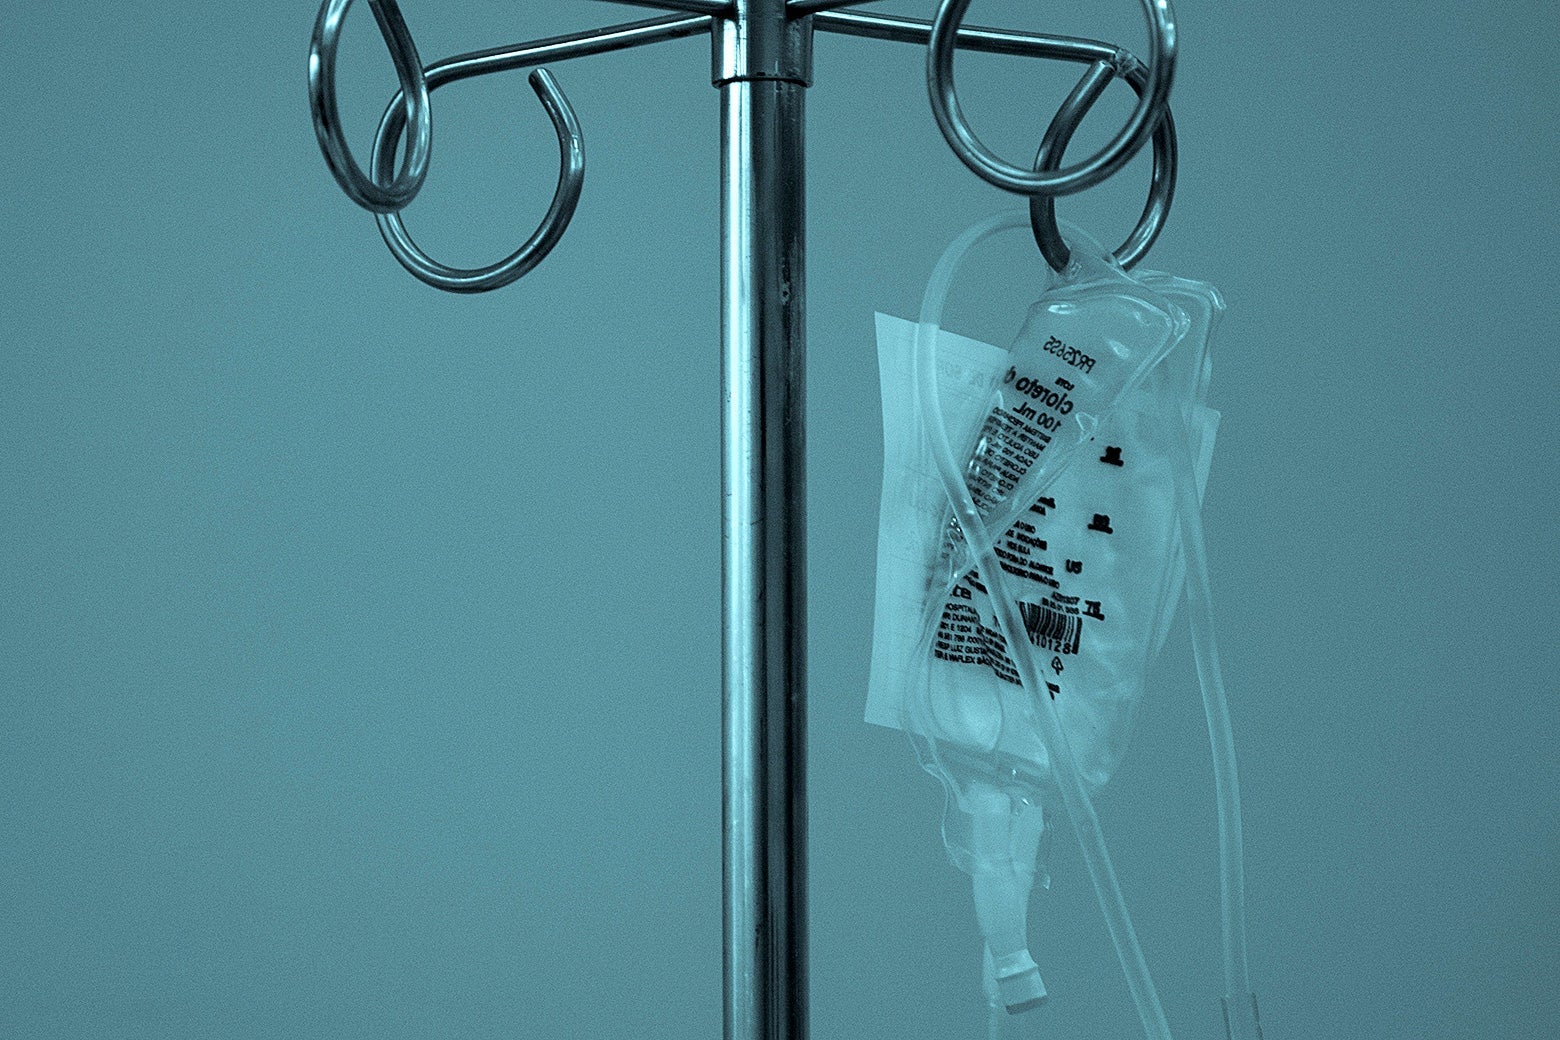 A IV bag hanging on a rack.